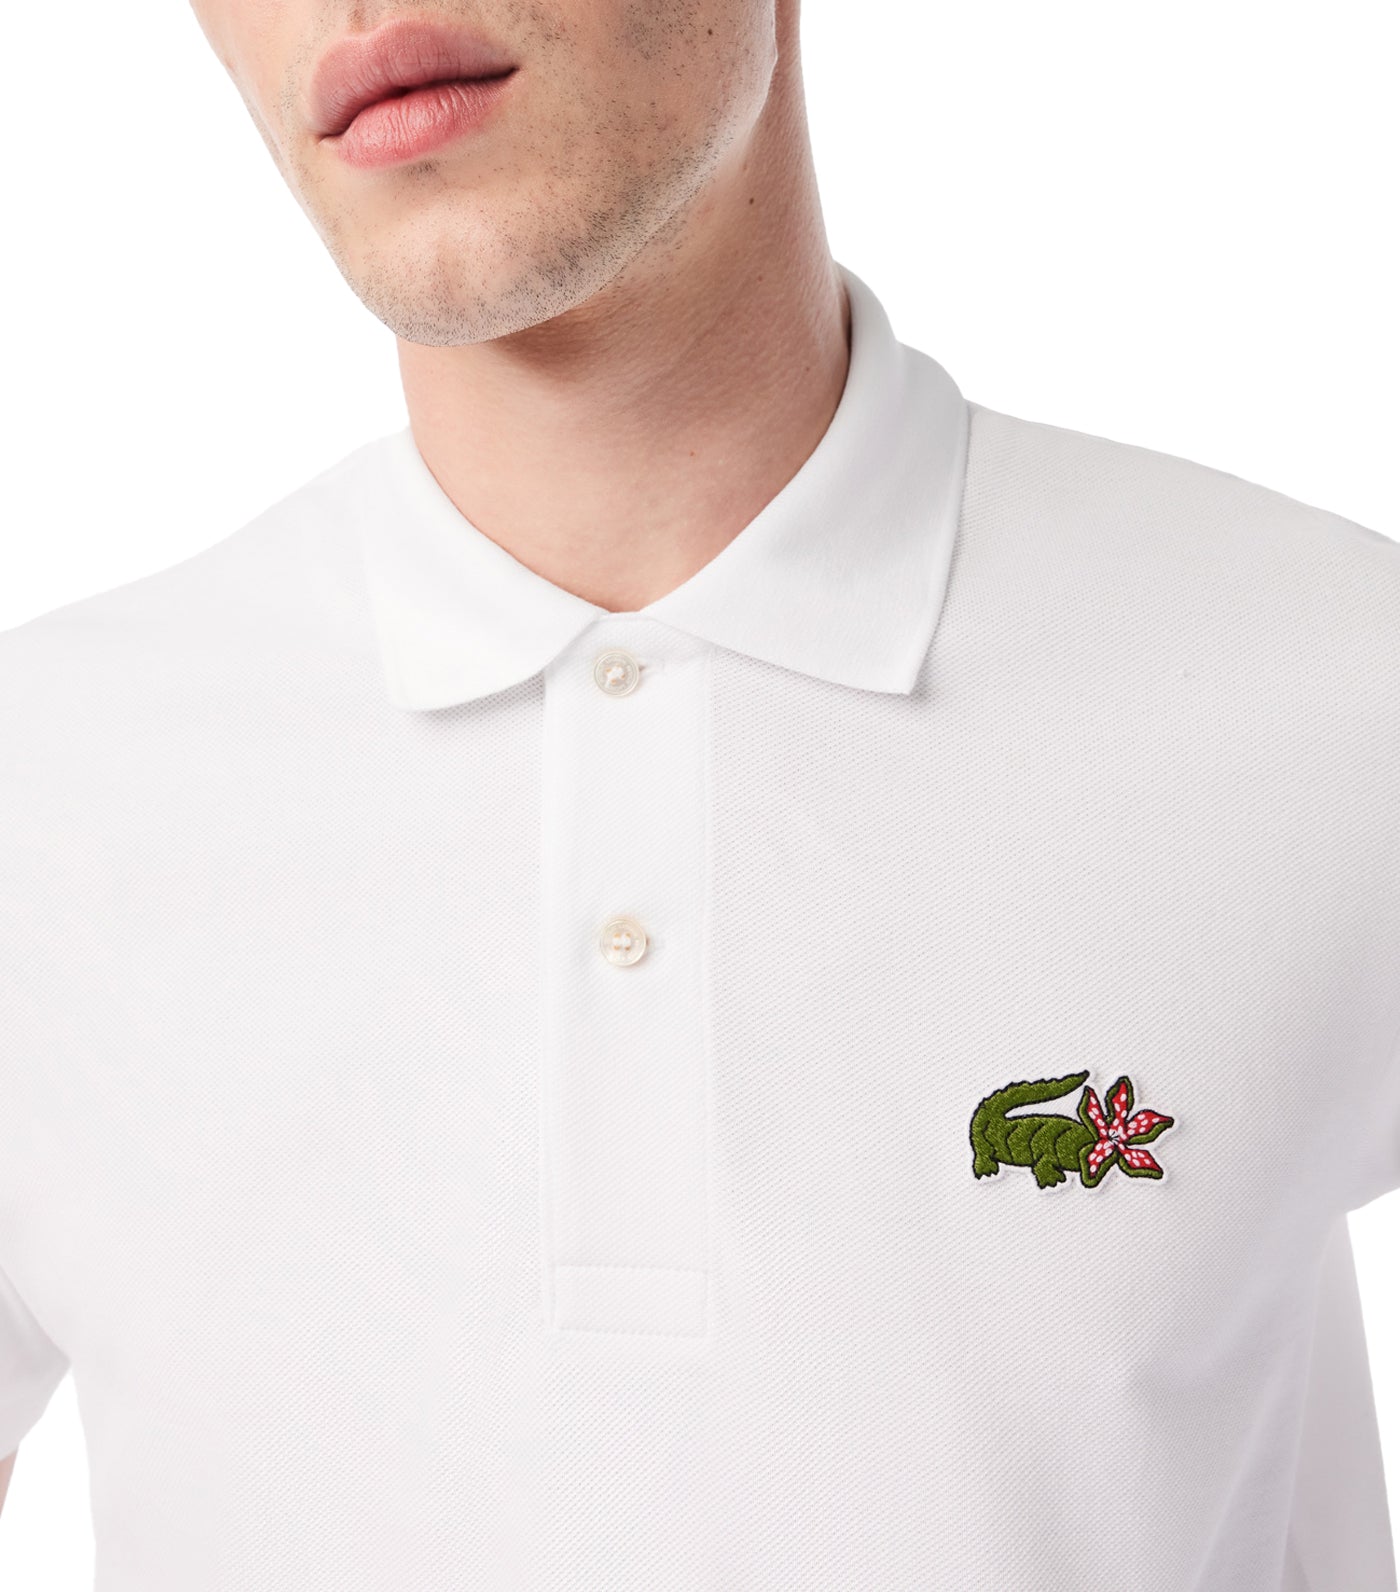 Men’s Organic Cotton Polo Shirt White/Stranger Things